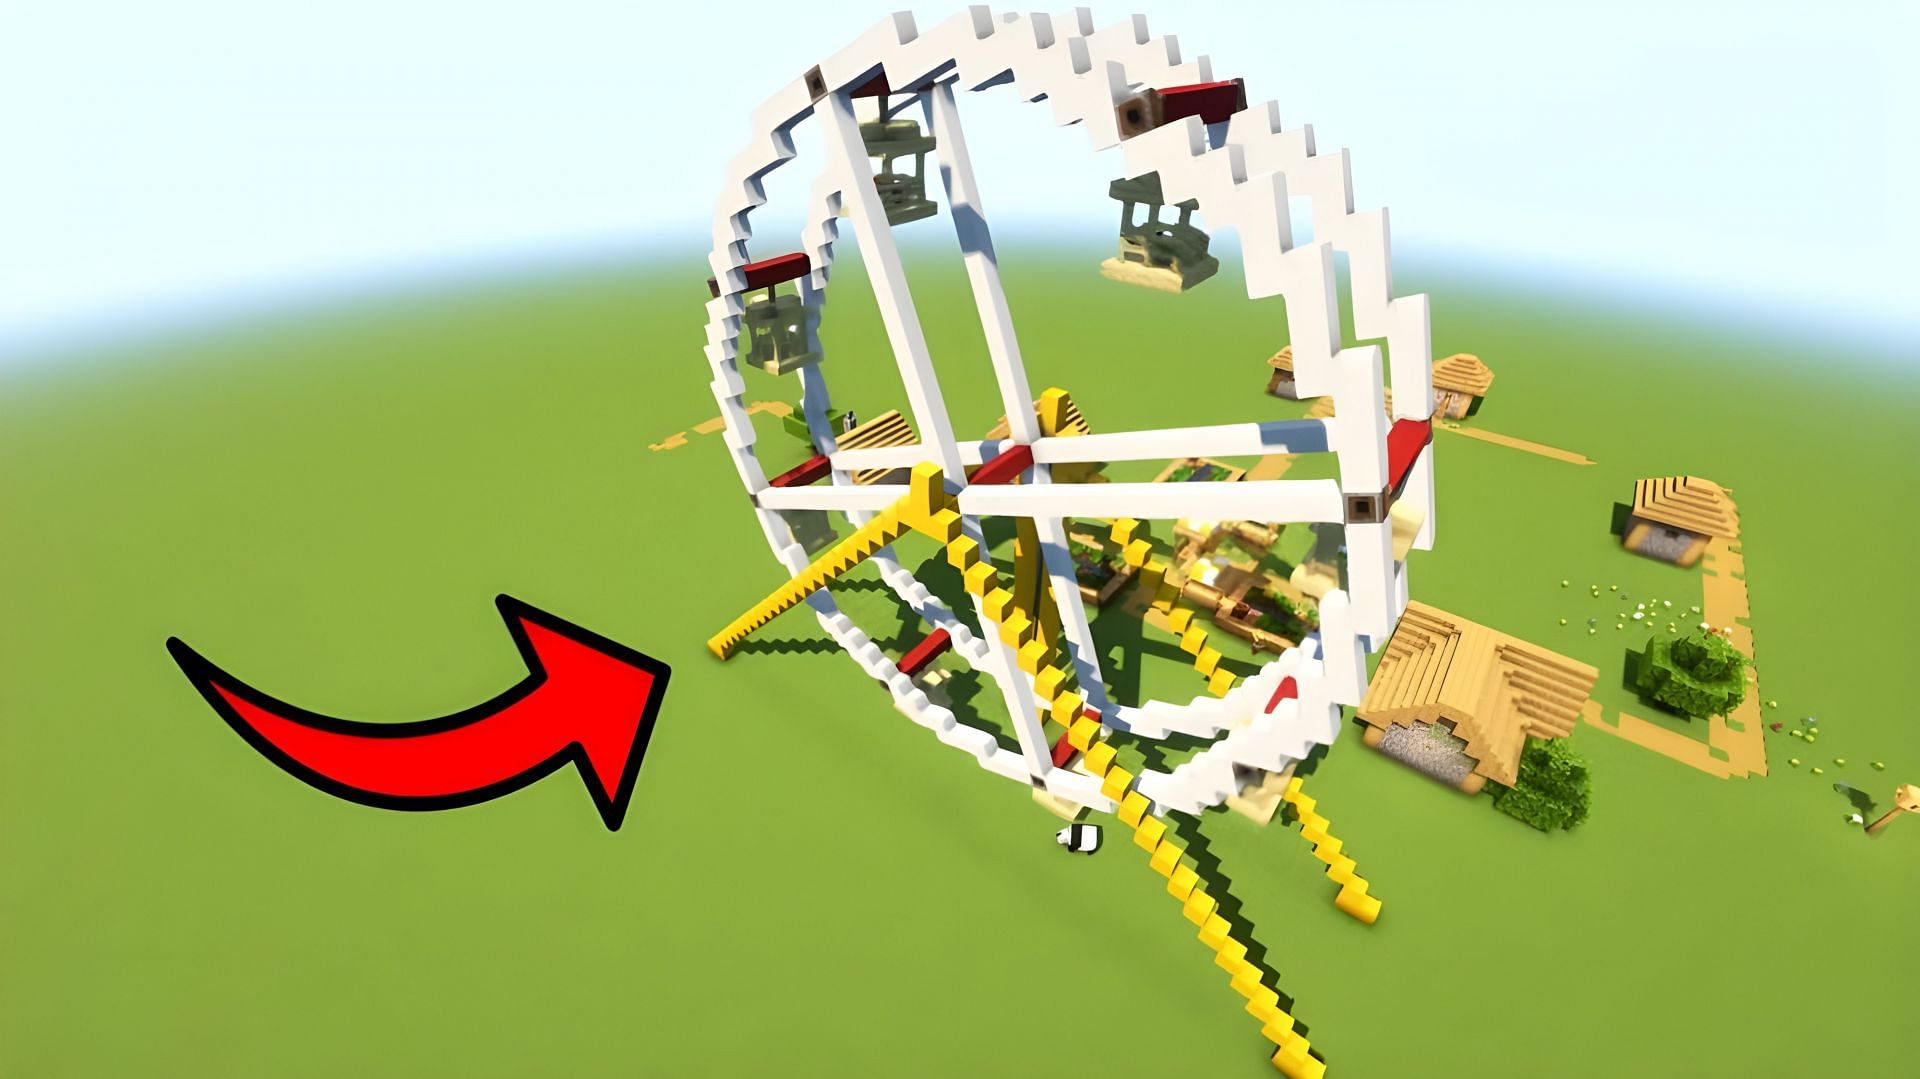 The Realistic Ferris Wheel (Image via Youtube/SeedVidz)